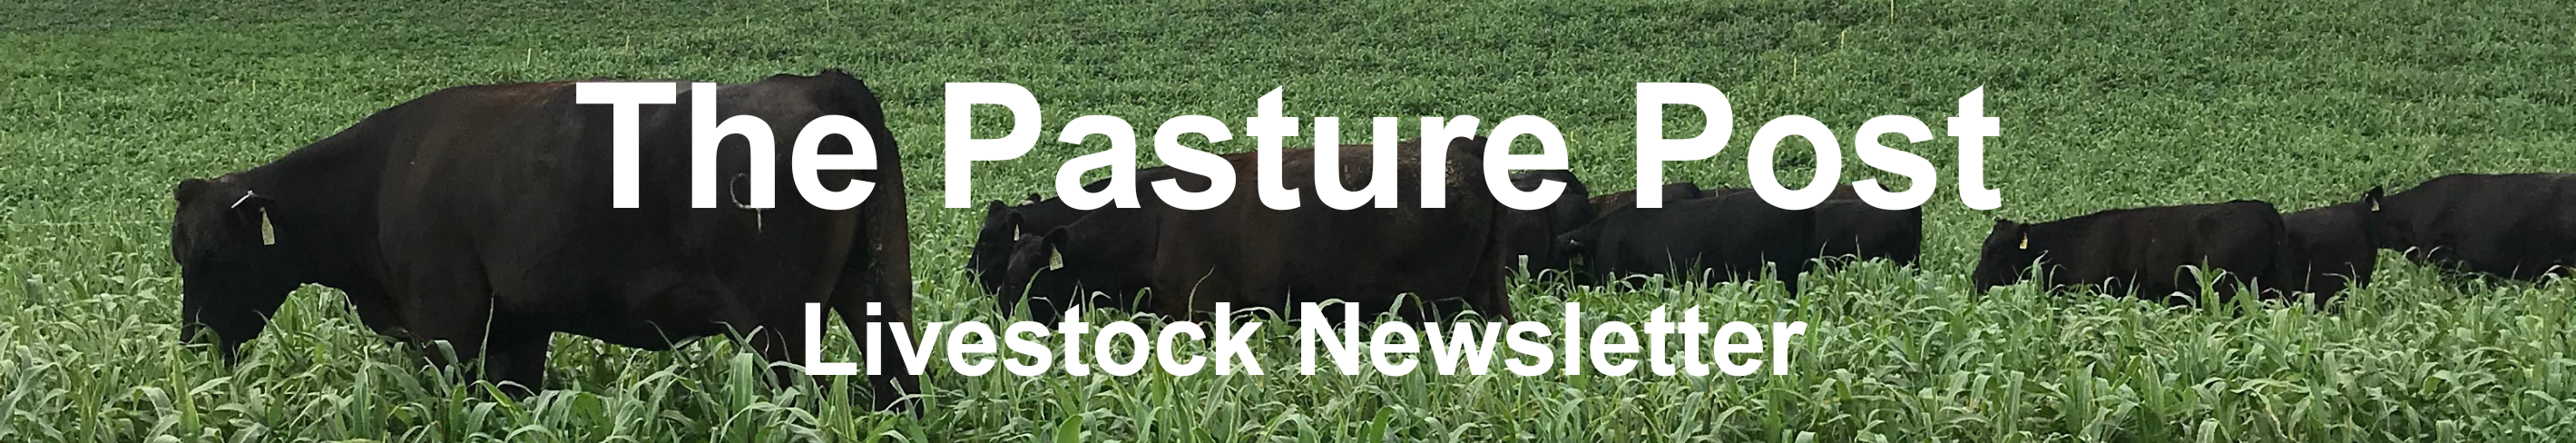 The Pasture Post Livestock Newsletter Banner